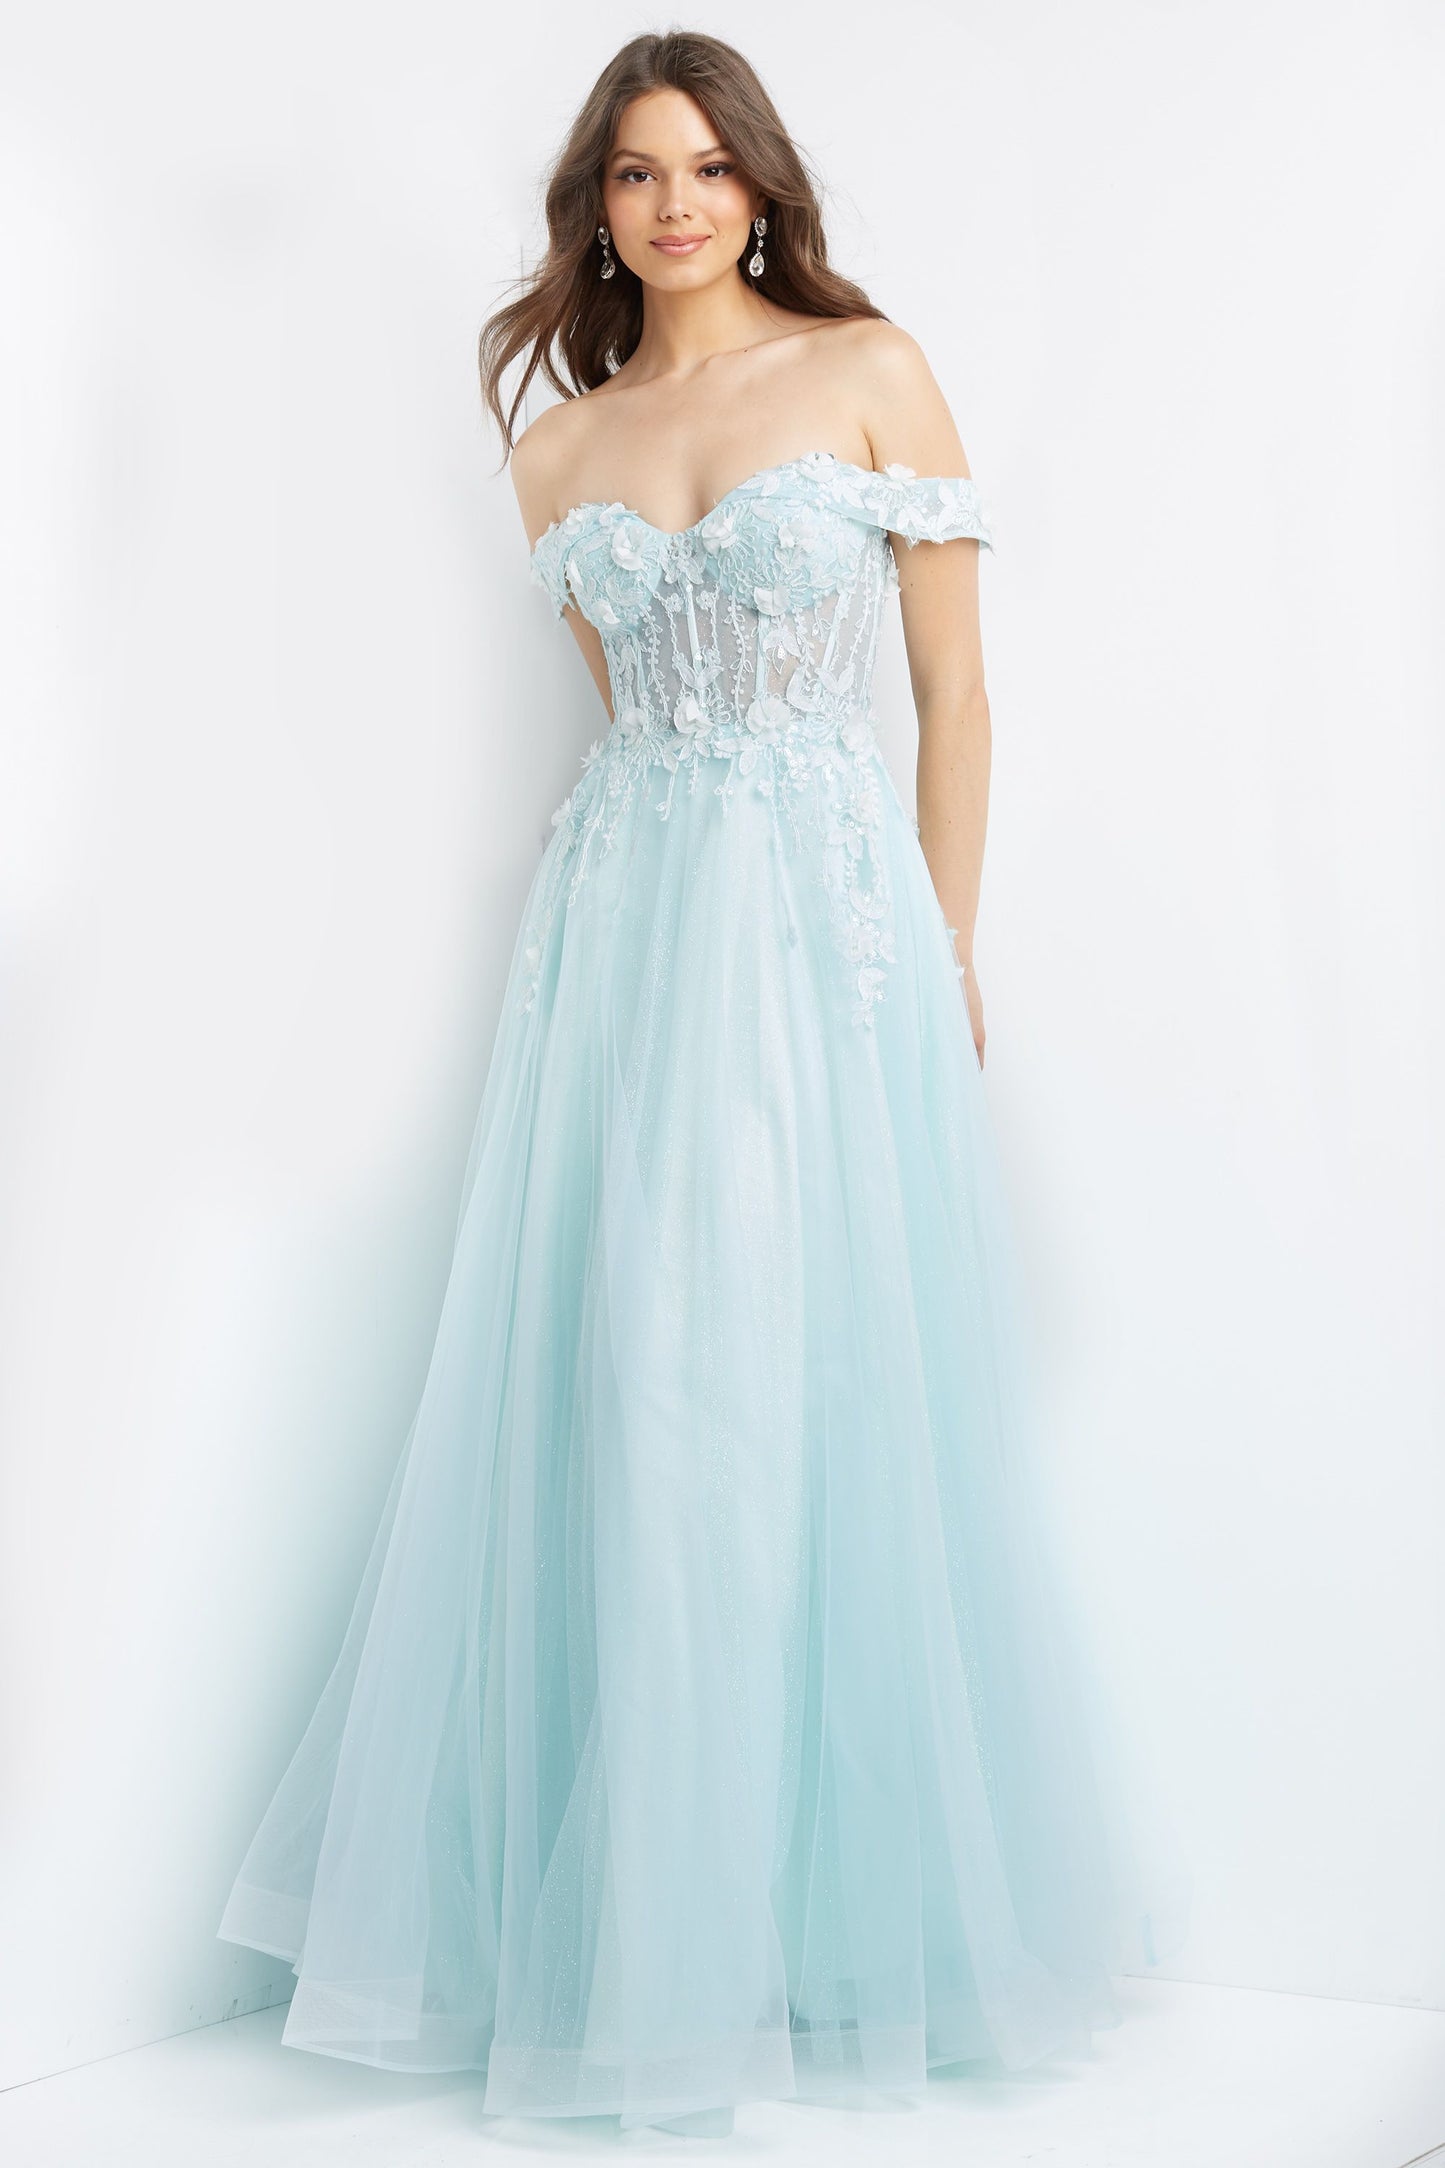    Jovani-JVN-08295-aqua-prom-dress-front-off-the-shoulder-3D-lace-appliques-corset-sheer-bodice-glitter-ballgown-skirt